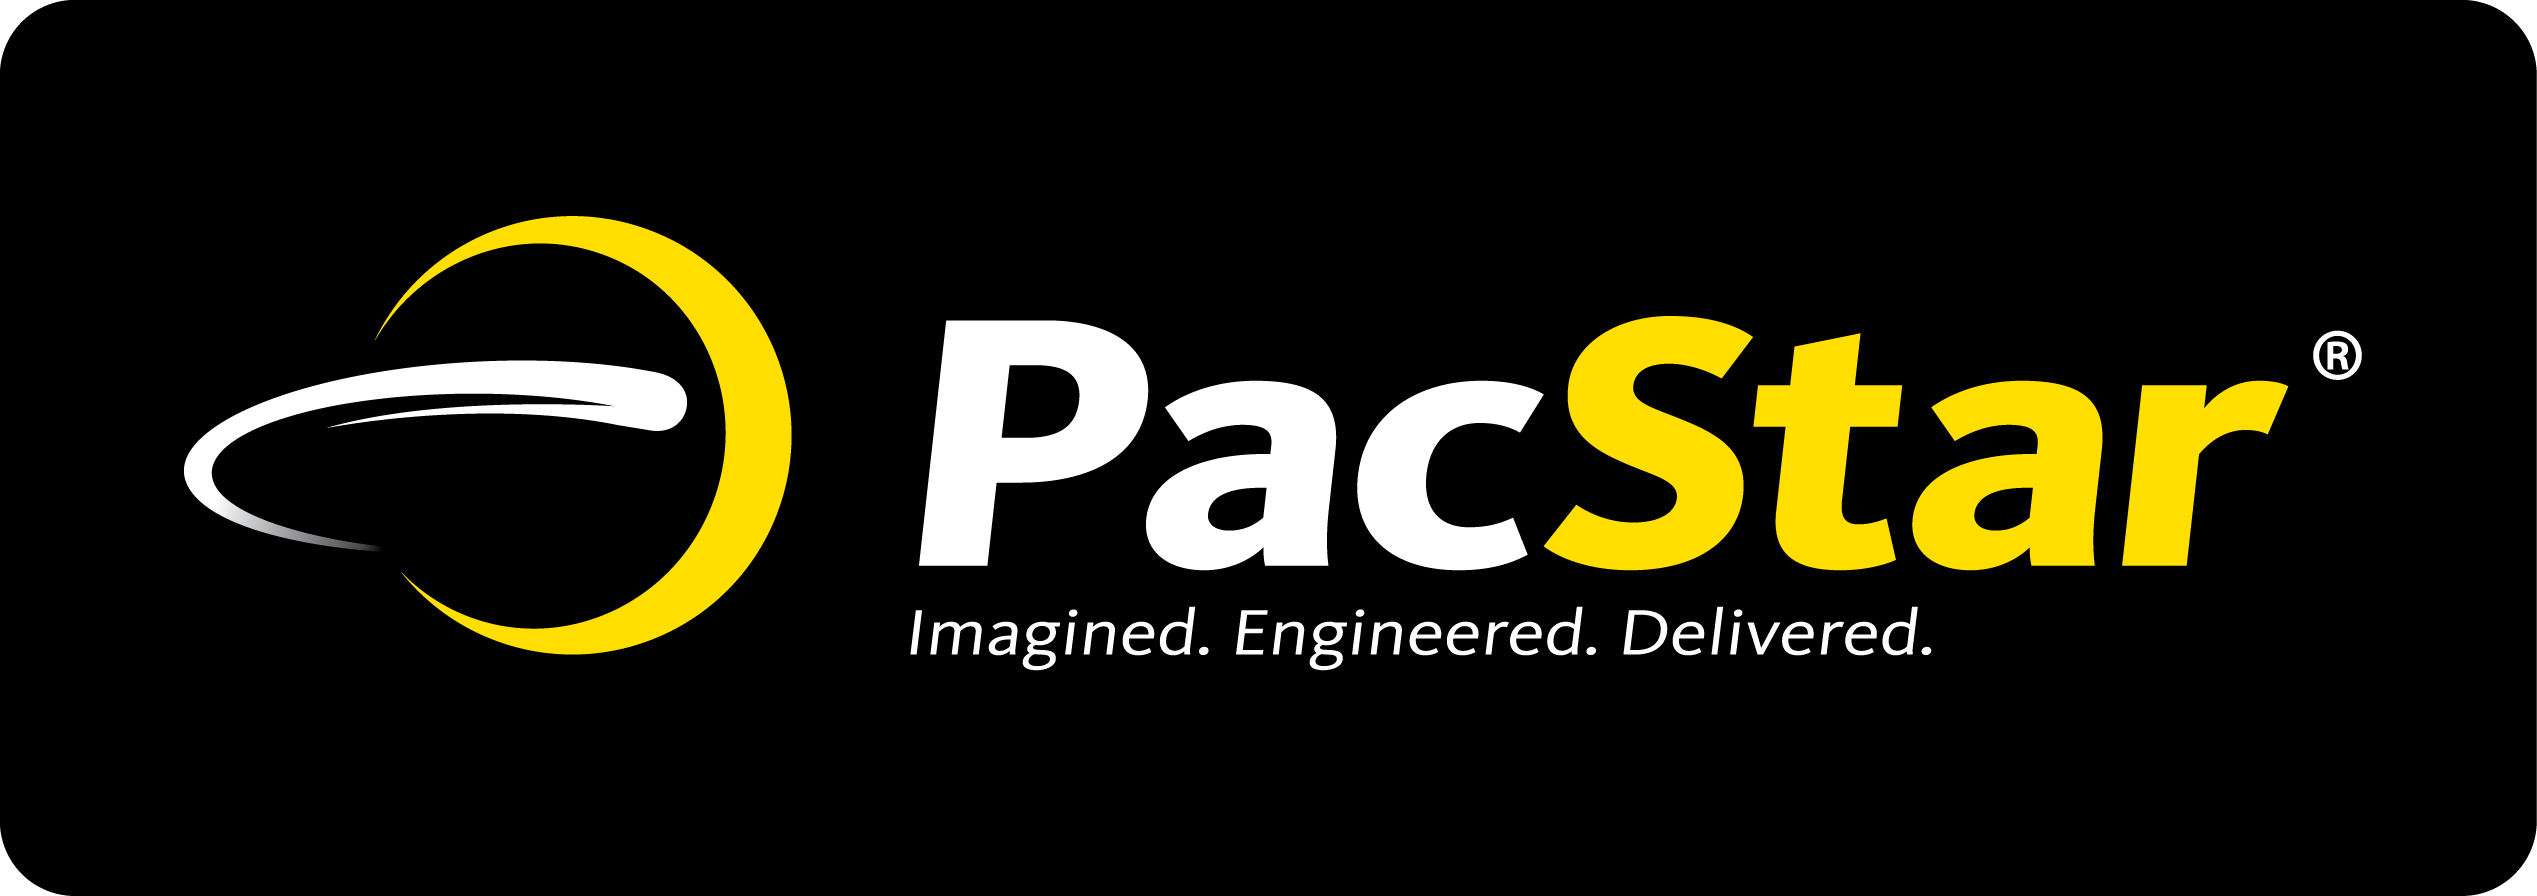 Pacific Star Communications, Inc. logo